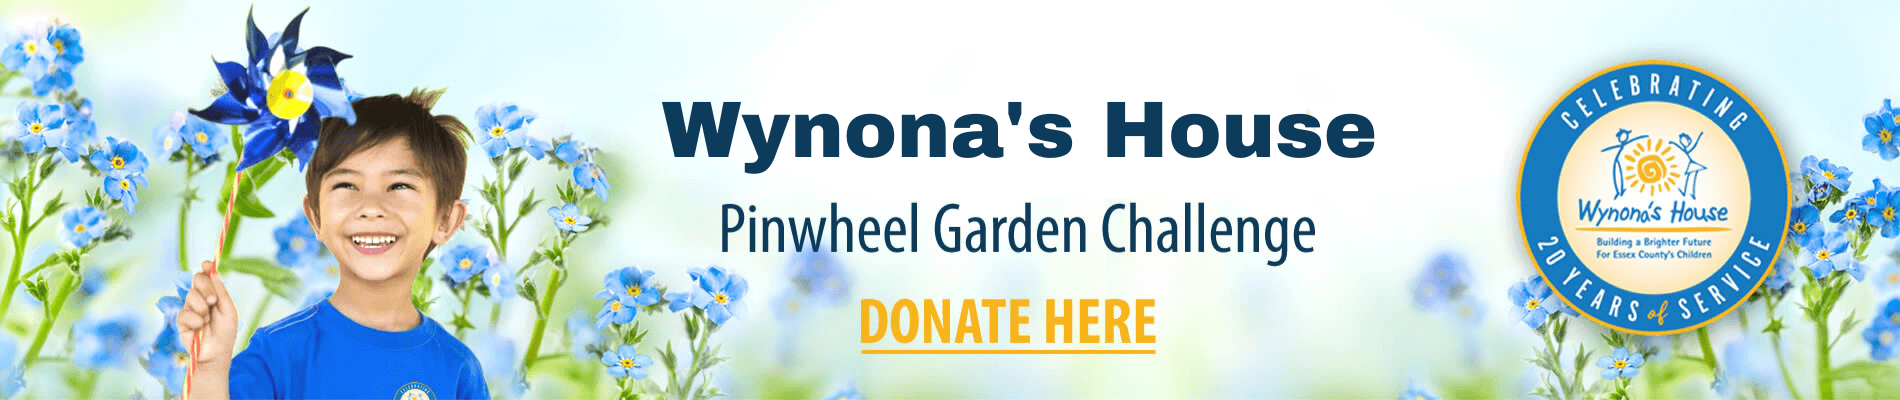 Wynona's House Pinwheel Garden Challenge